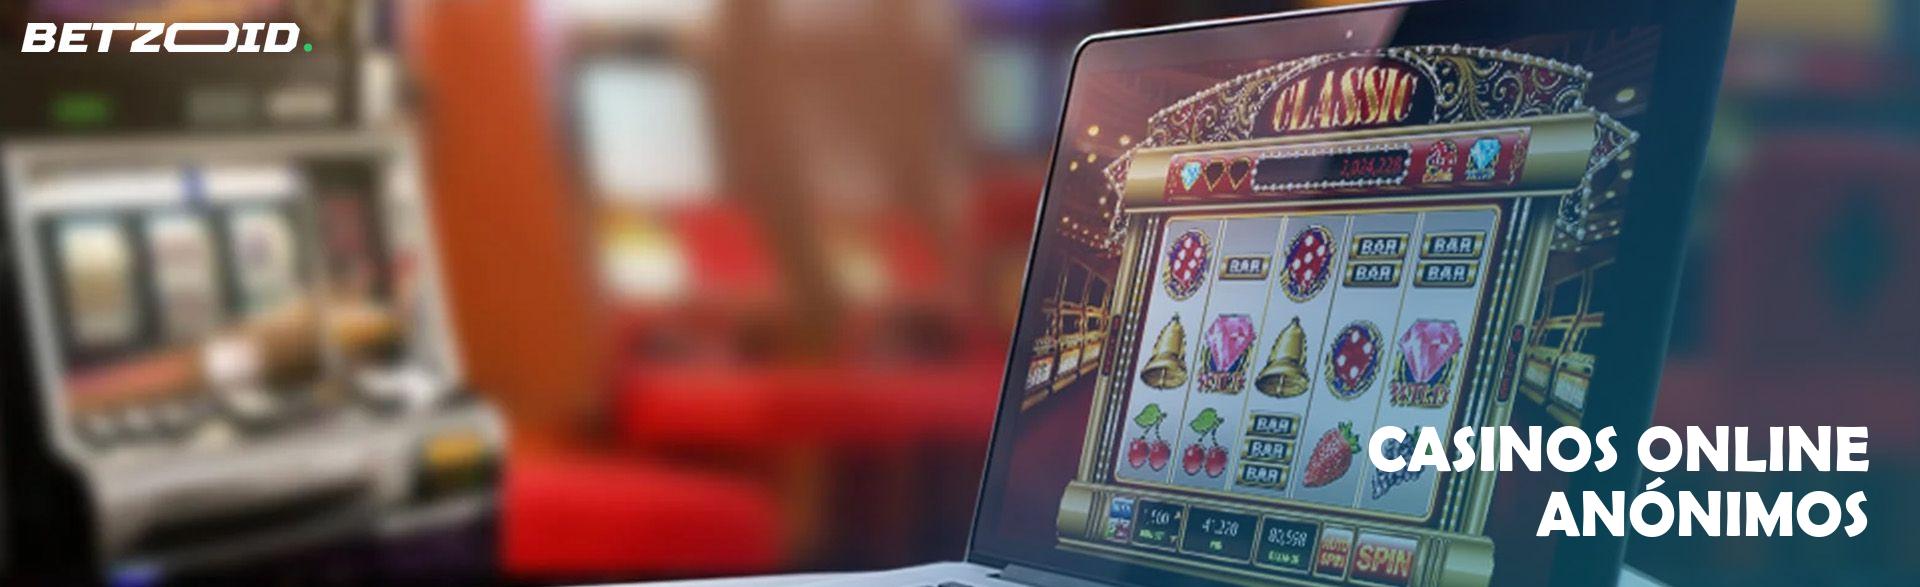 Casinos Online Anónimos.